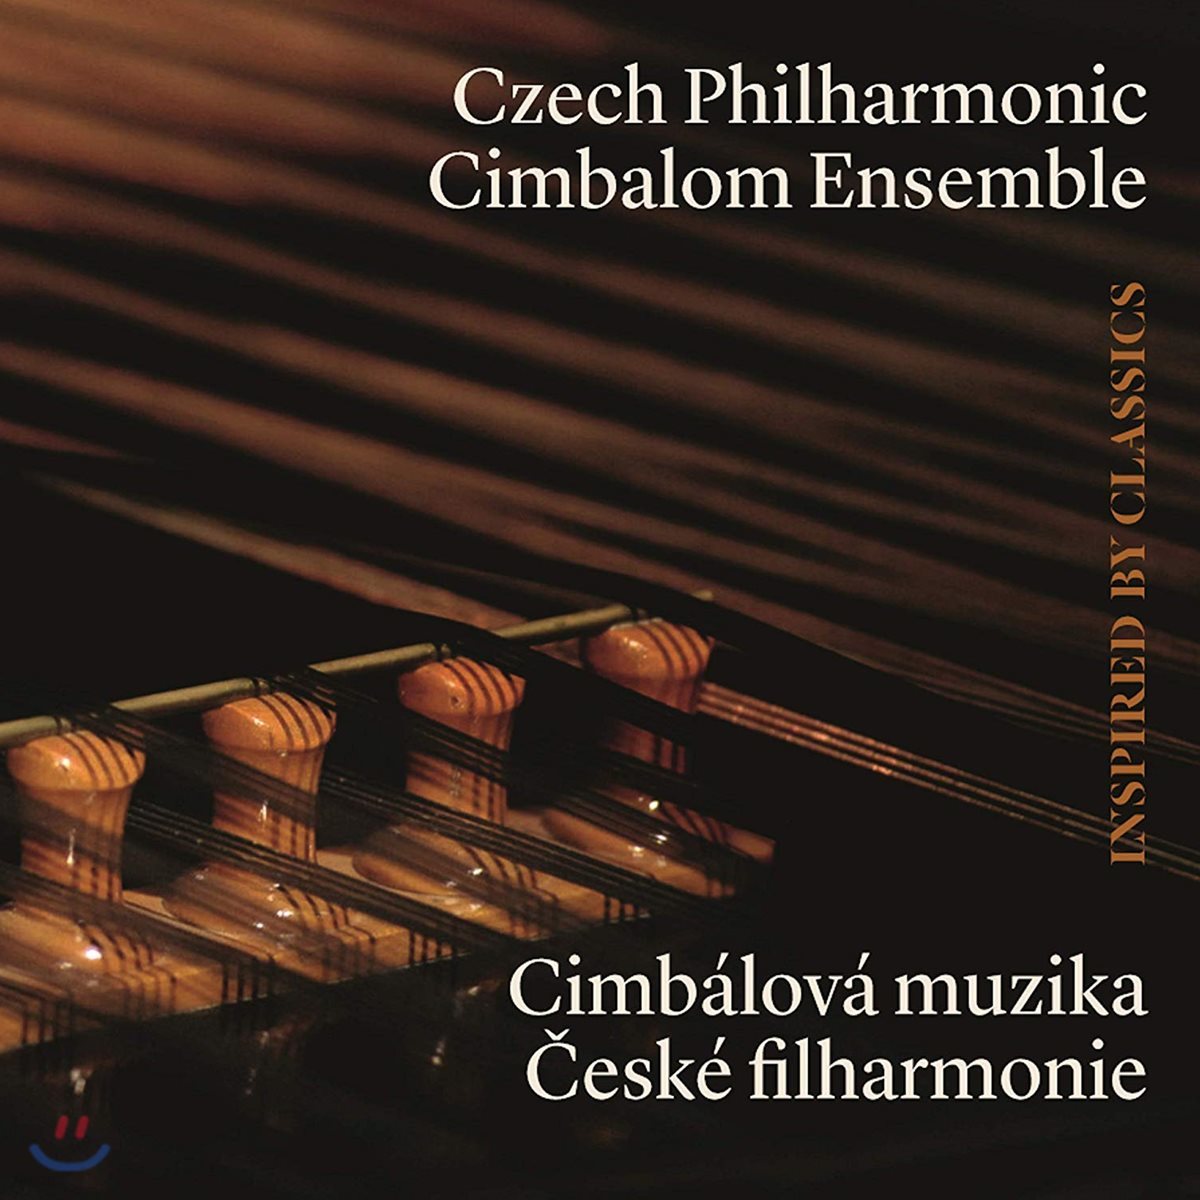 Czech Philharmonic Cimbalom Ensemble 침발론 연주집 - 브람스: 헝가리 무곡 / 리스트: 헝가리 광시곡 / 사라사테: 치고이네르바이젠 